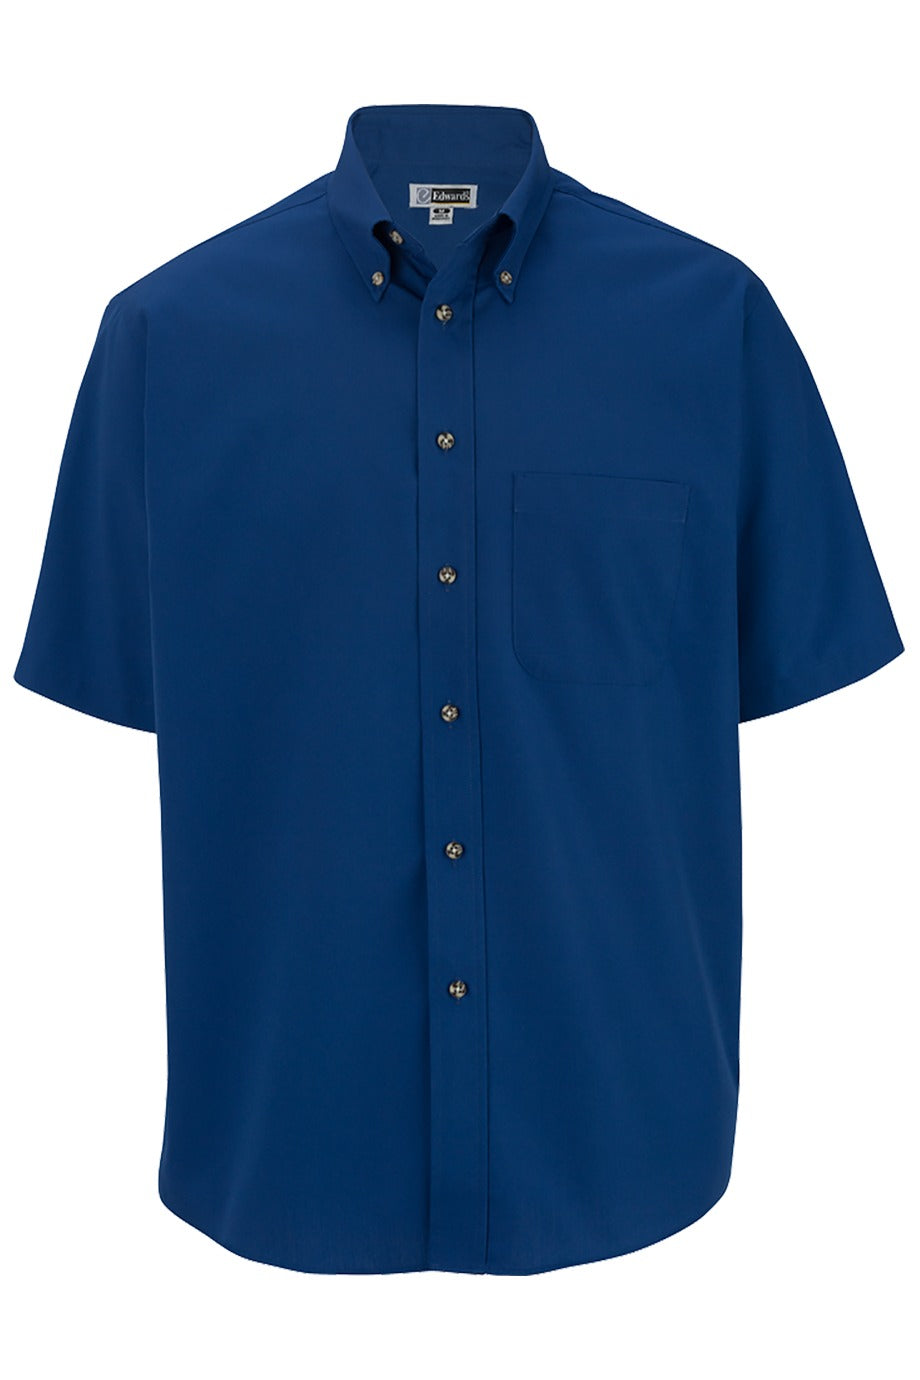 Edwards Men's Royal Blue Easy Care Short Sleeve Poplin Shirt